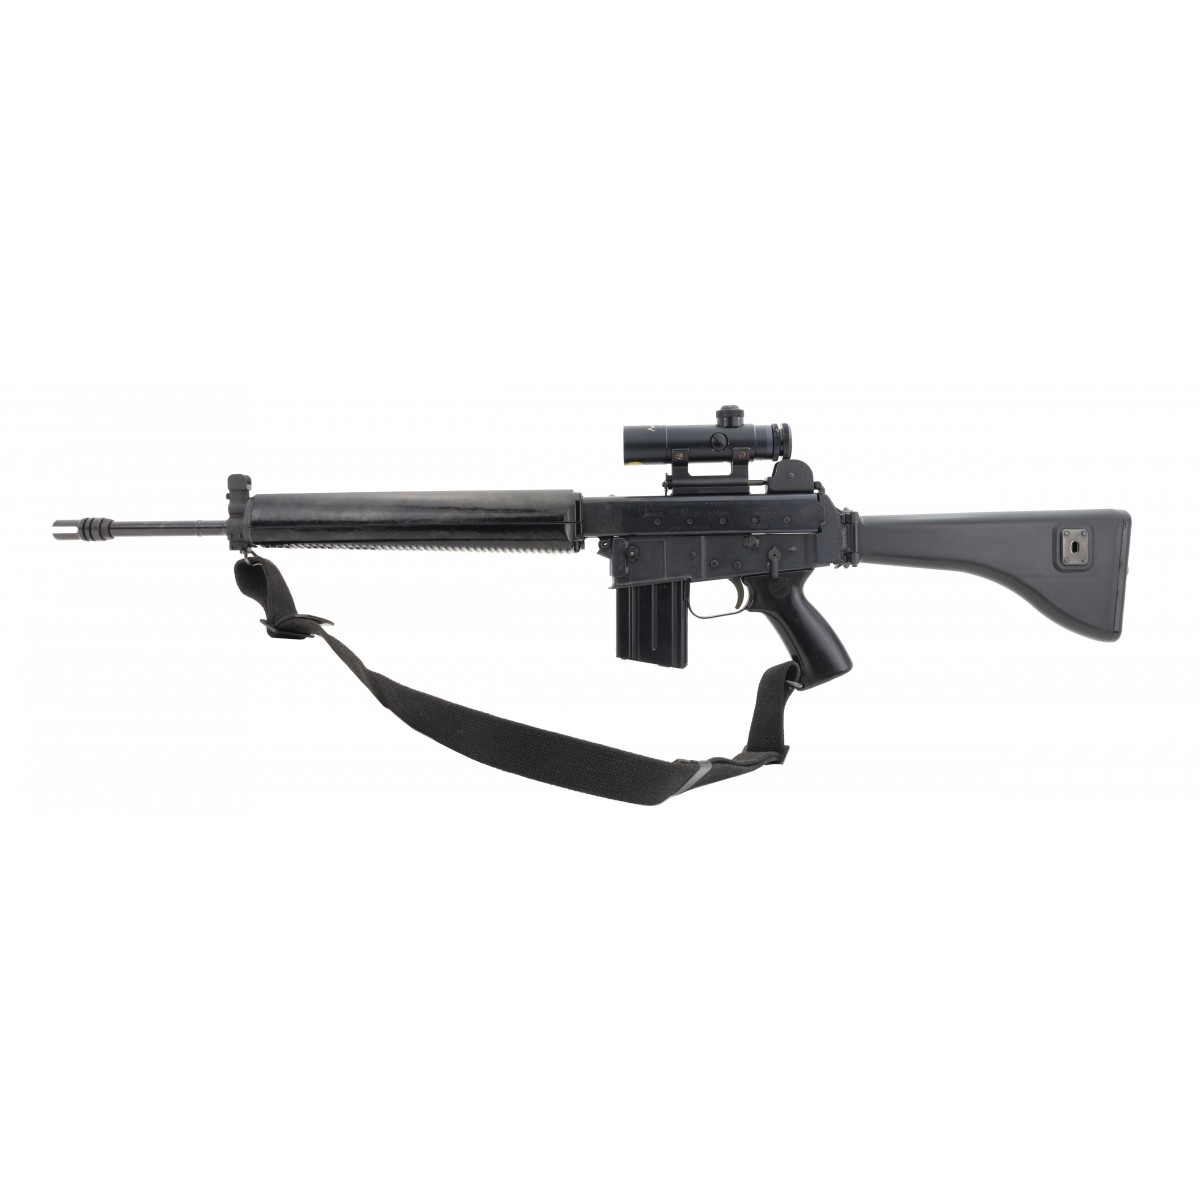 Armalite AR-180 5.56 caliber rifle for sale.